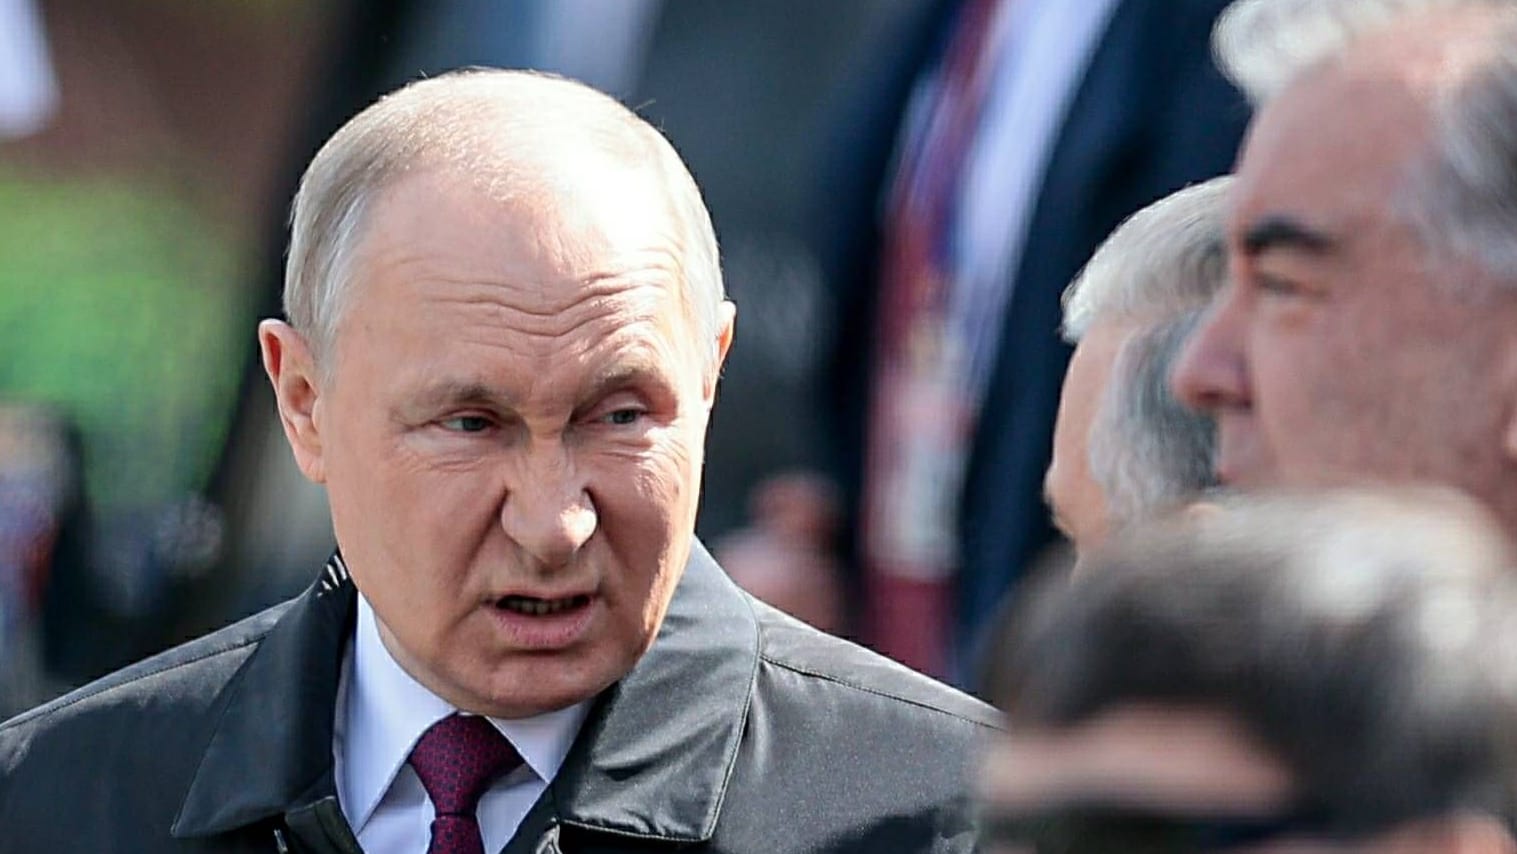 Russland feiert sich selbst: Putin will Panzer-Parade im ganzen Land zeigen